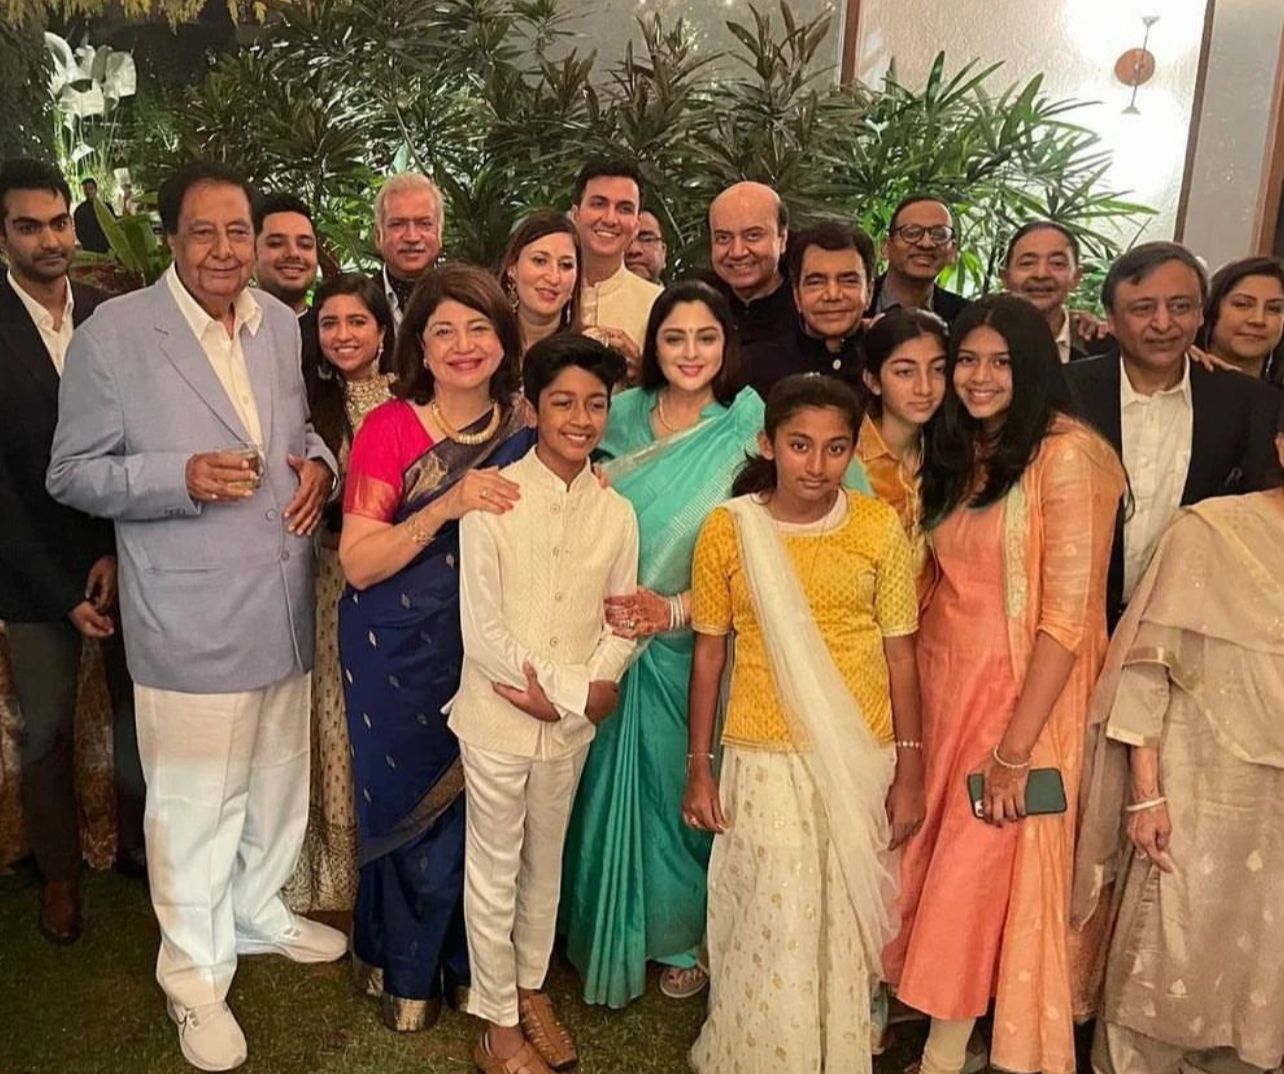 Nagma shared family wedding event photos on Instagram